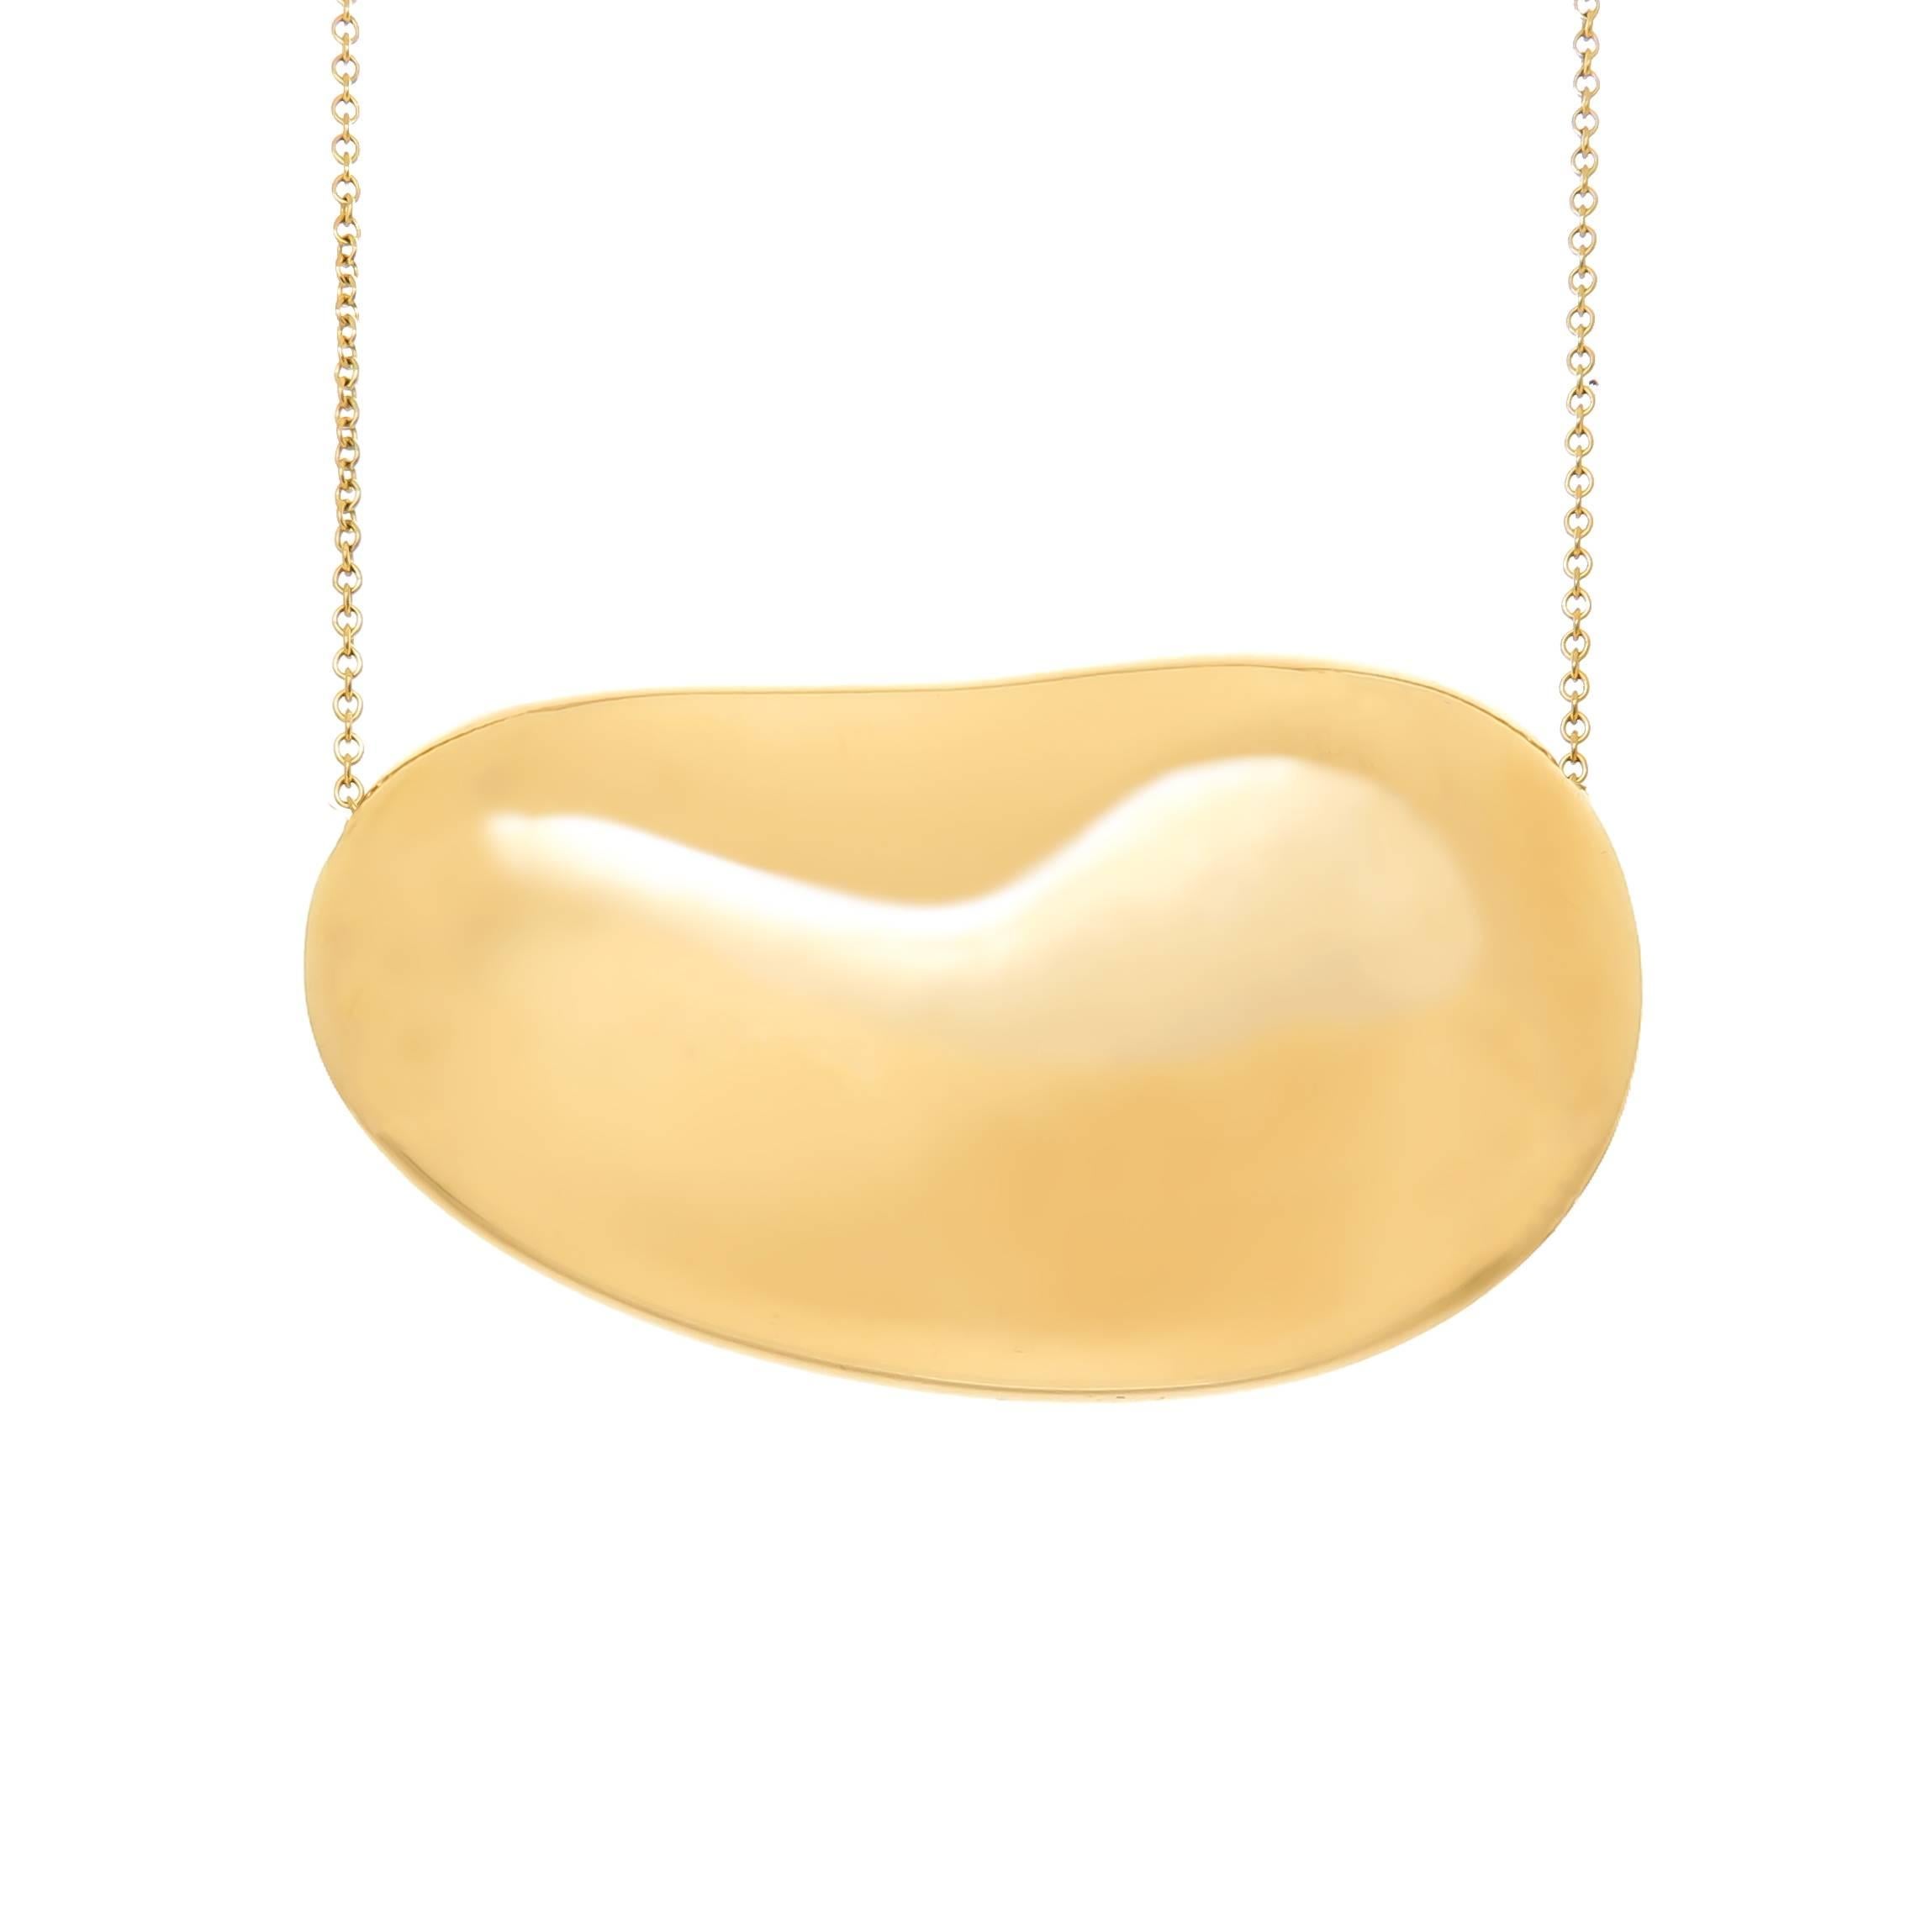 Tiffany & Co. Elsa Peretti Large Yellow Gold Bean Pendant Necklace